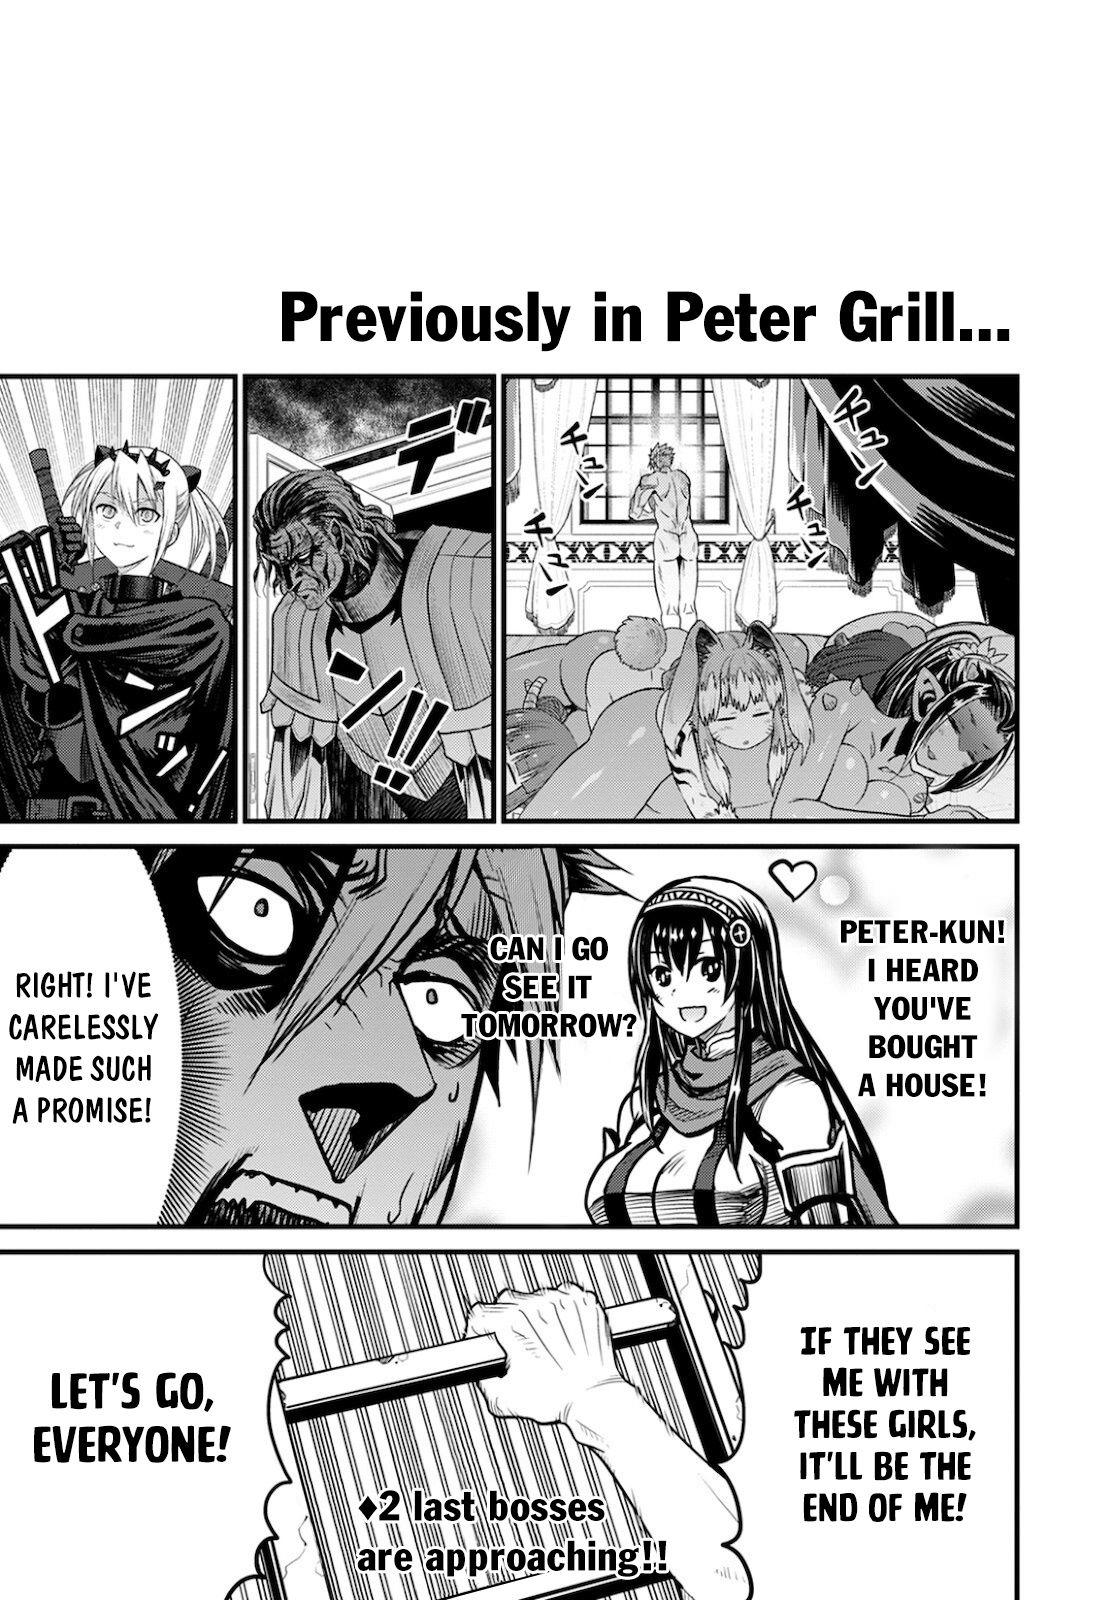 Peter Grill To Kenja No Jikan - Volume 5 Cover : r/manga